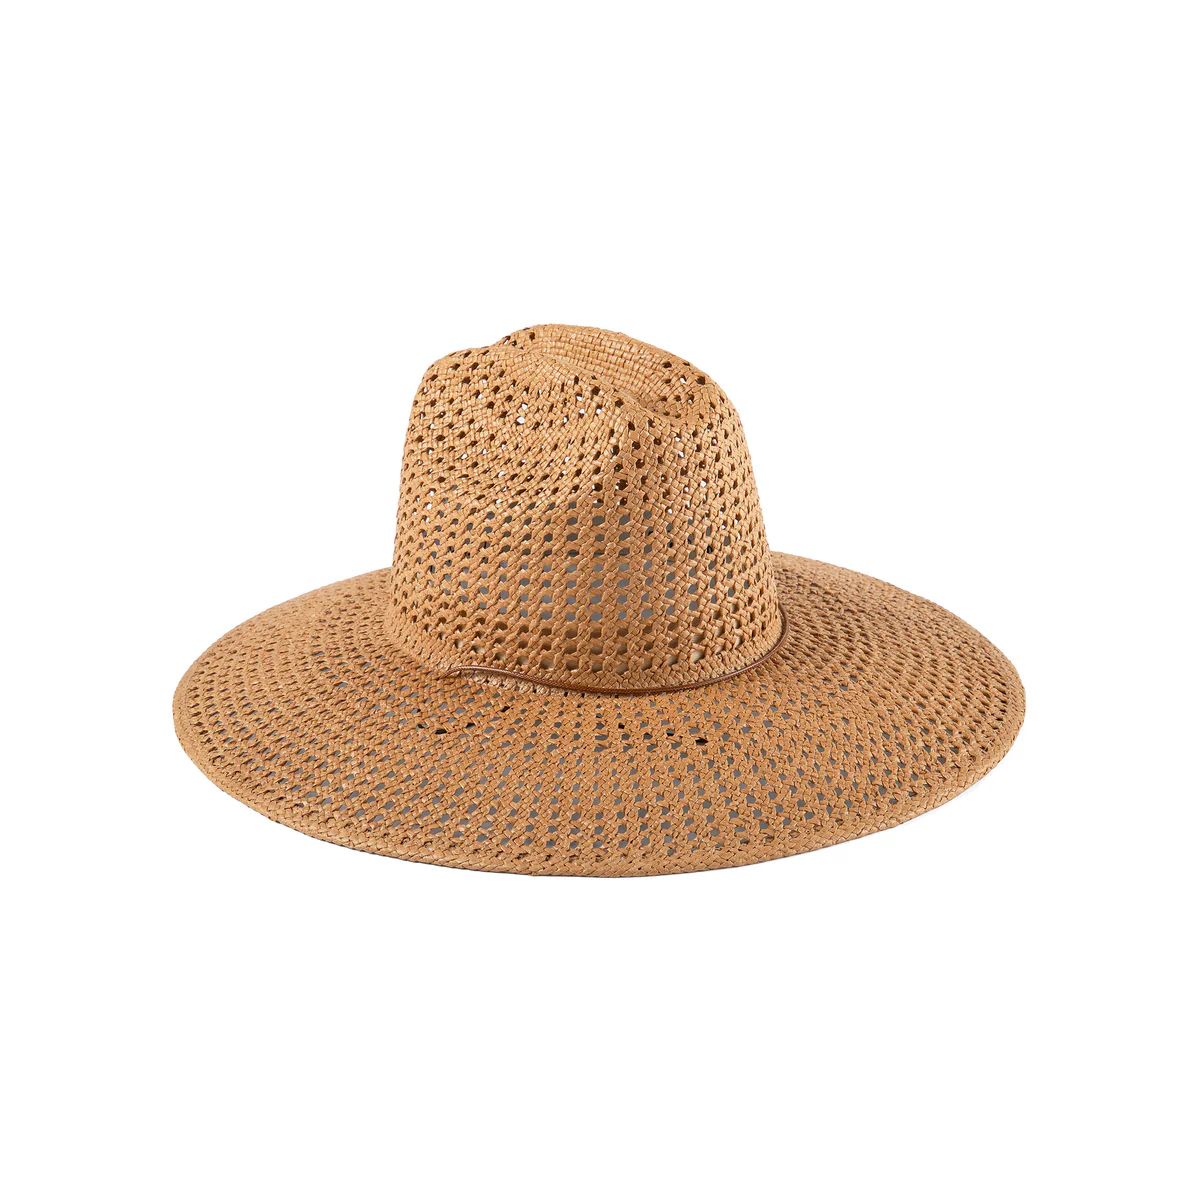 The Vista - Straw Cowboy Hat in Brown | Lack of Color US | Lack of Color US